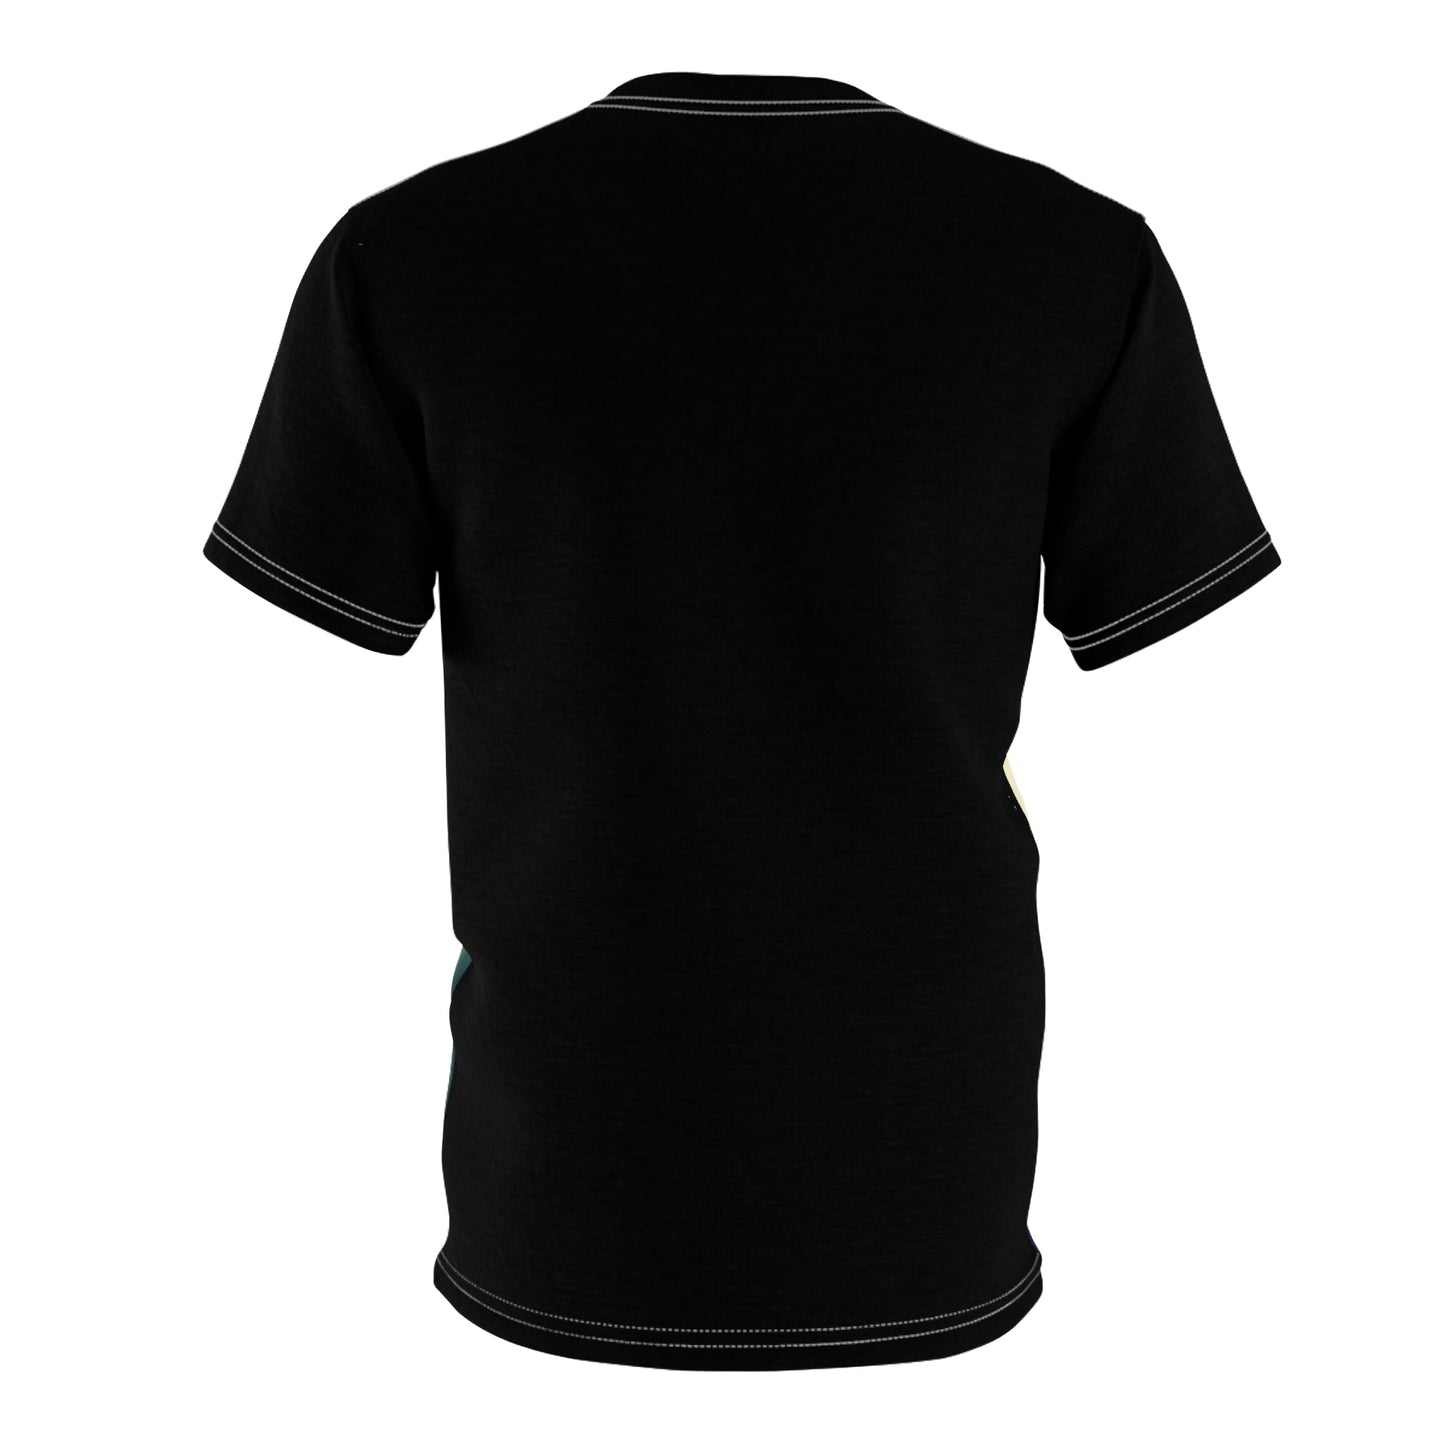 Clandestine - Unisex All-Over Print Cut & Sew T-Shirt